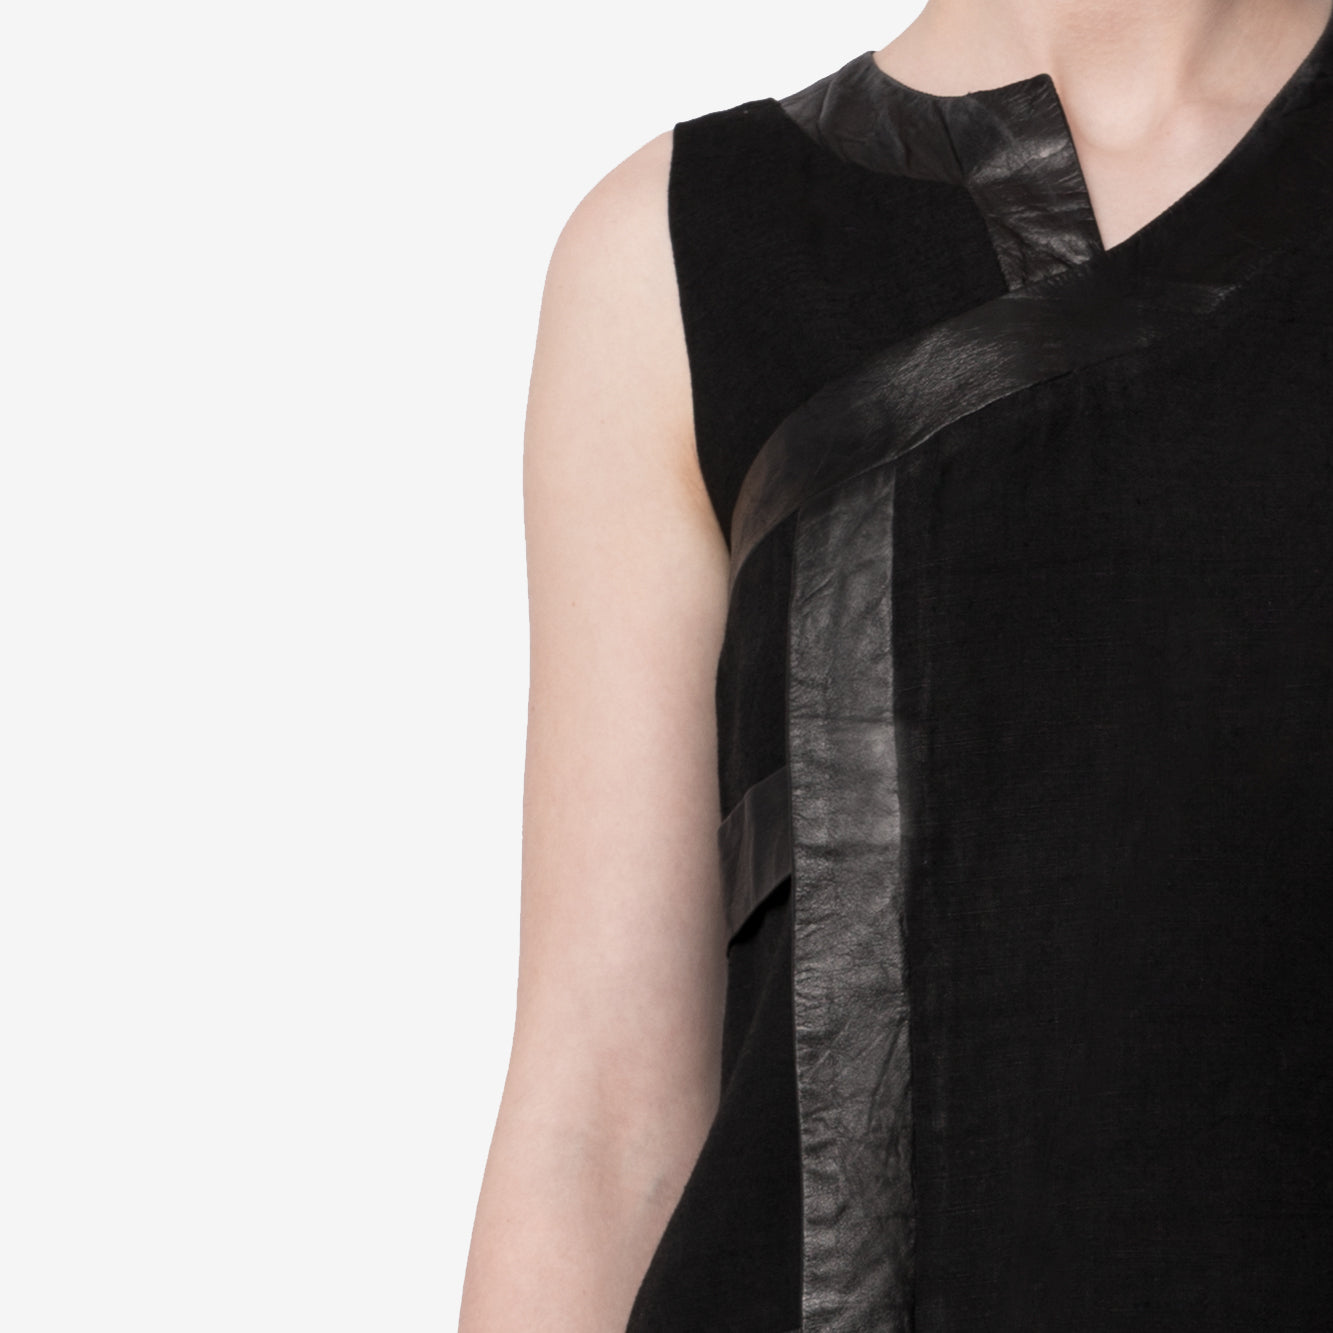 Paneled leather detail dress - Tindi